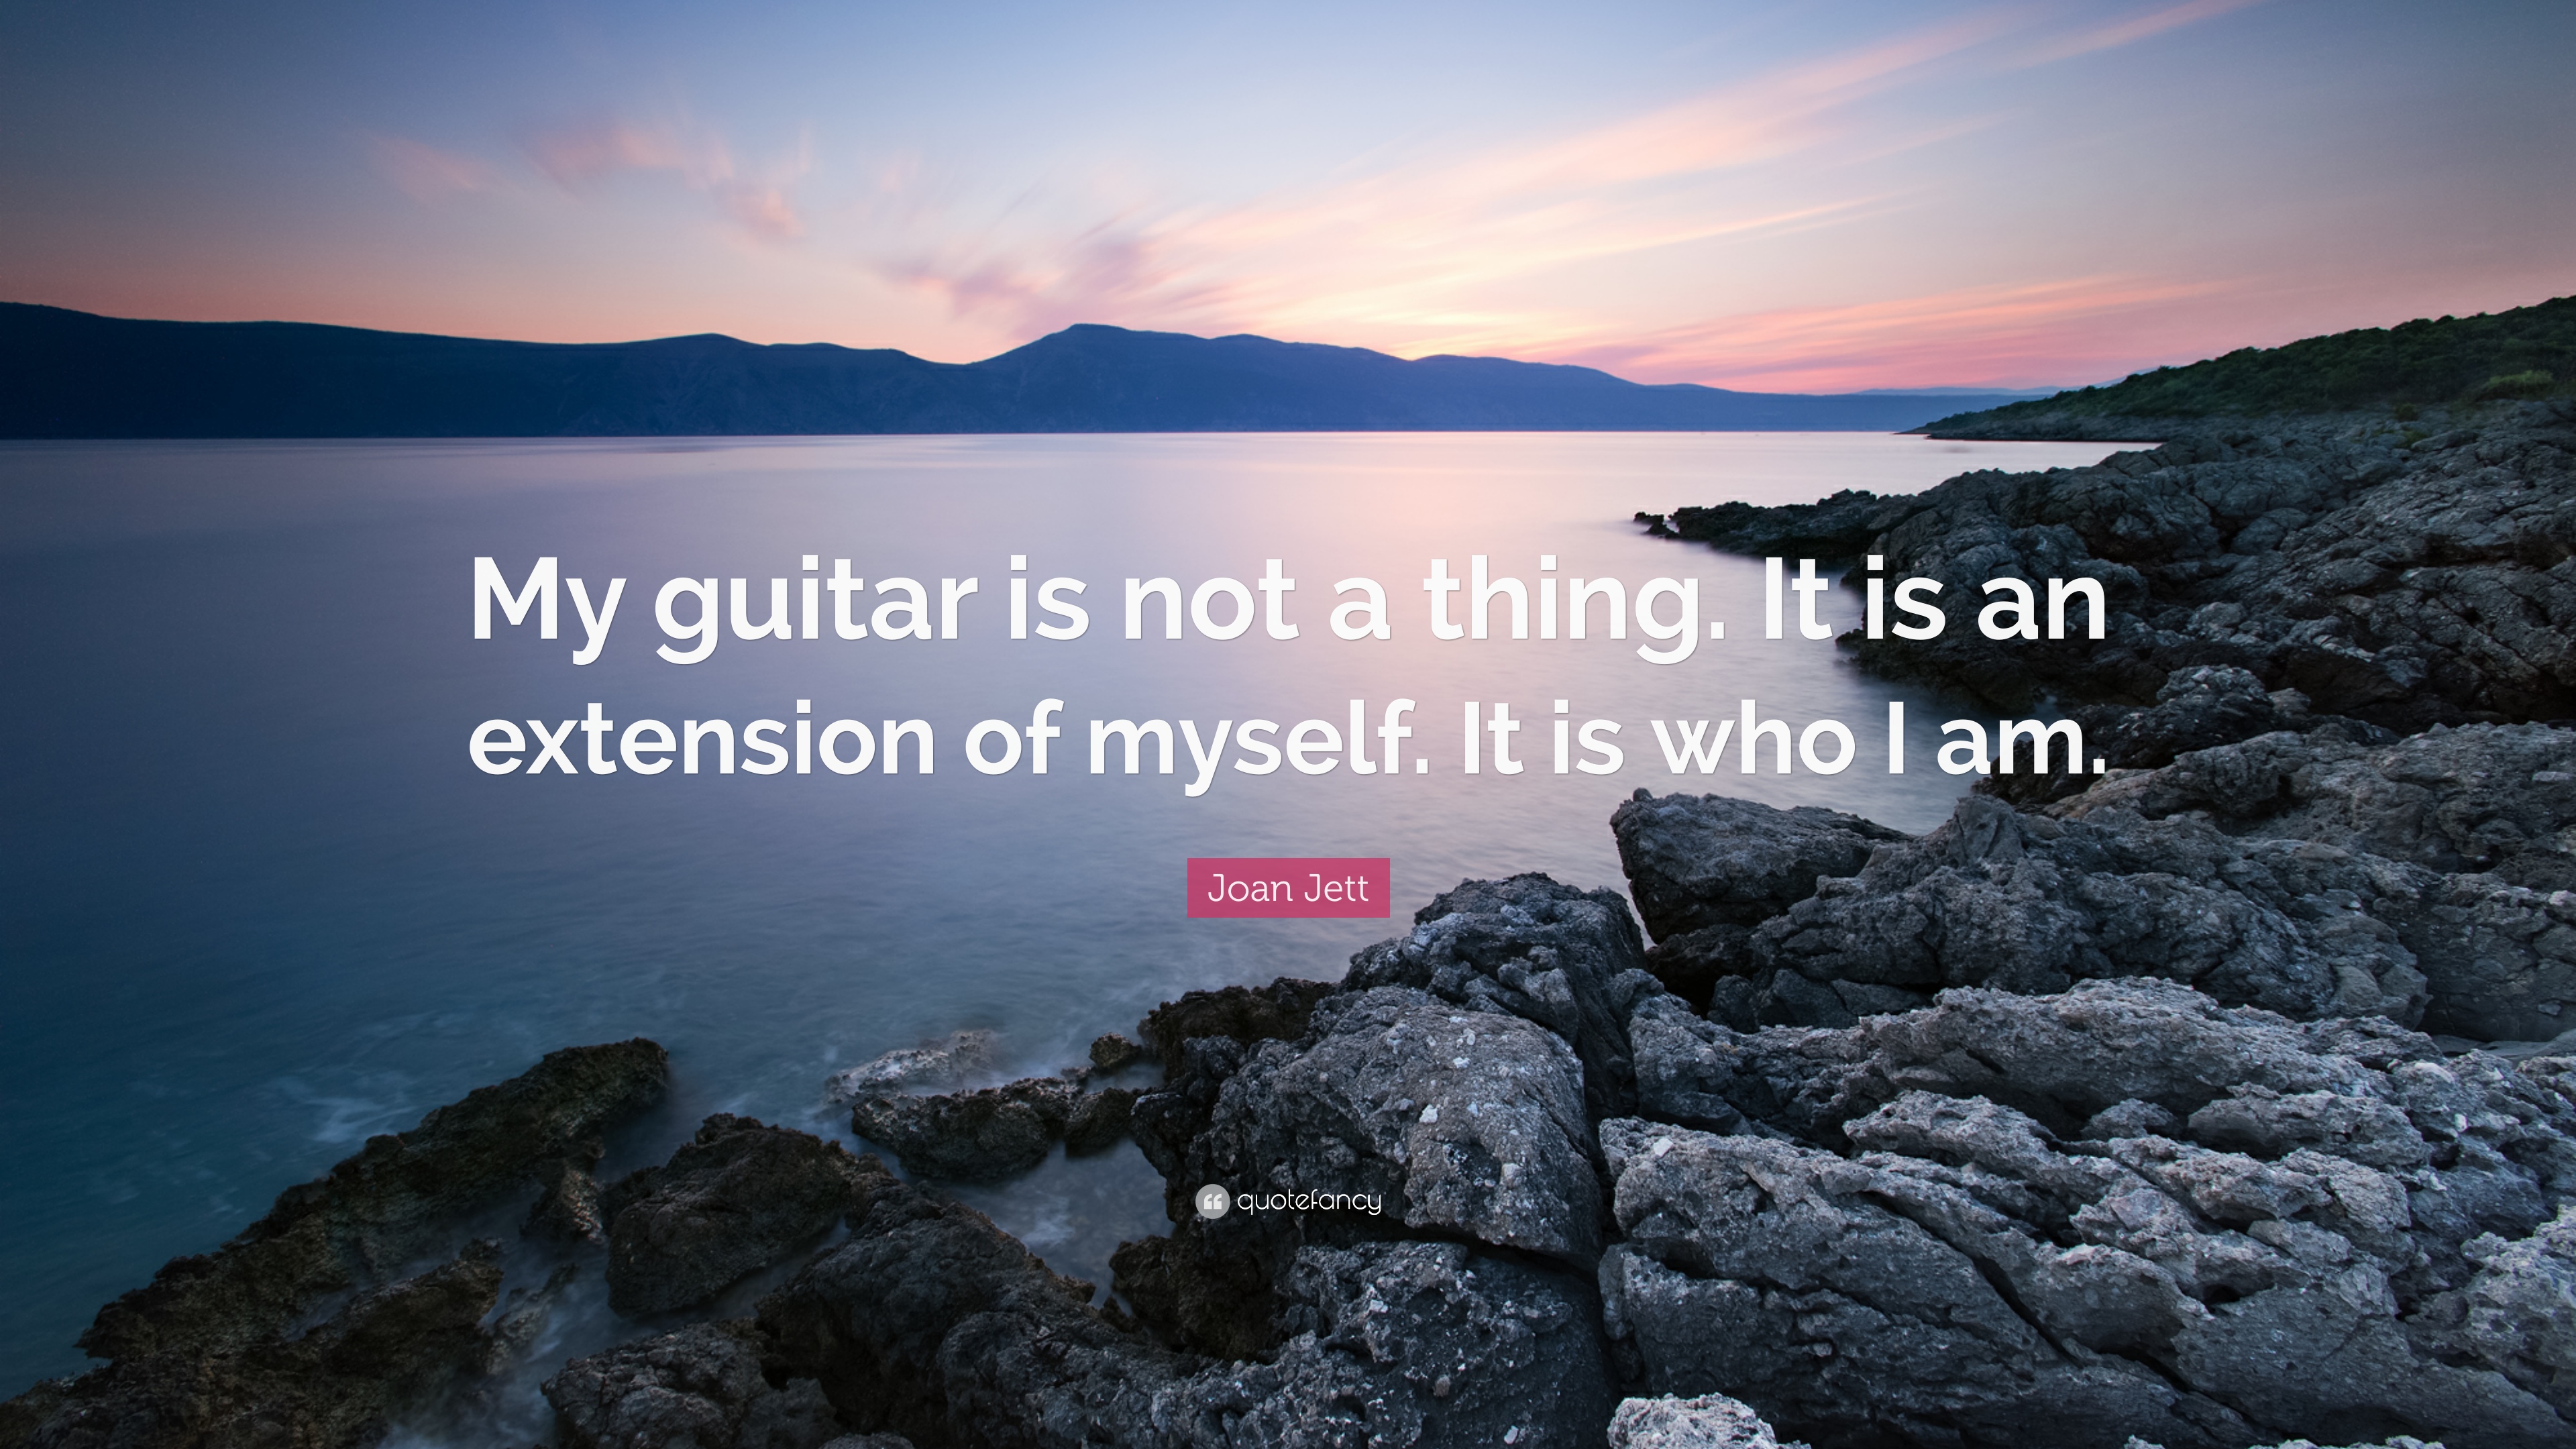 10 Best Joan Jett Quotes